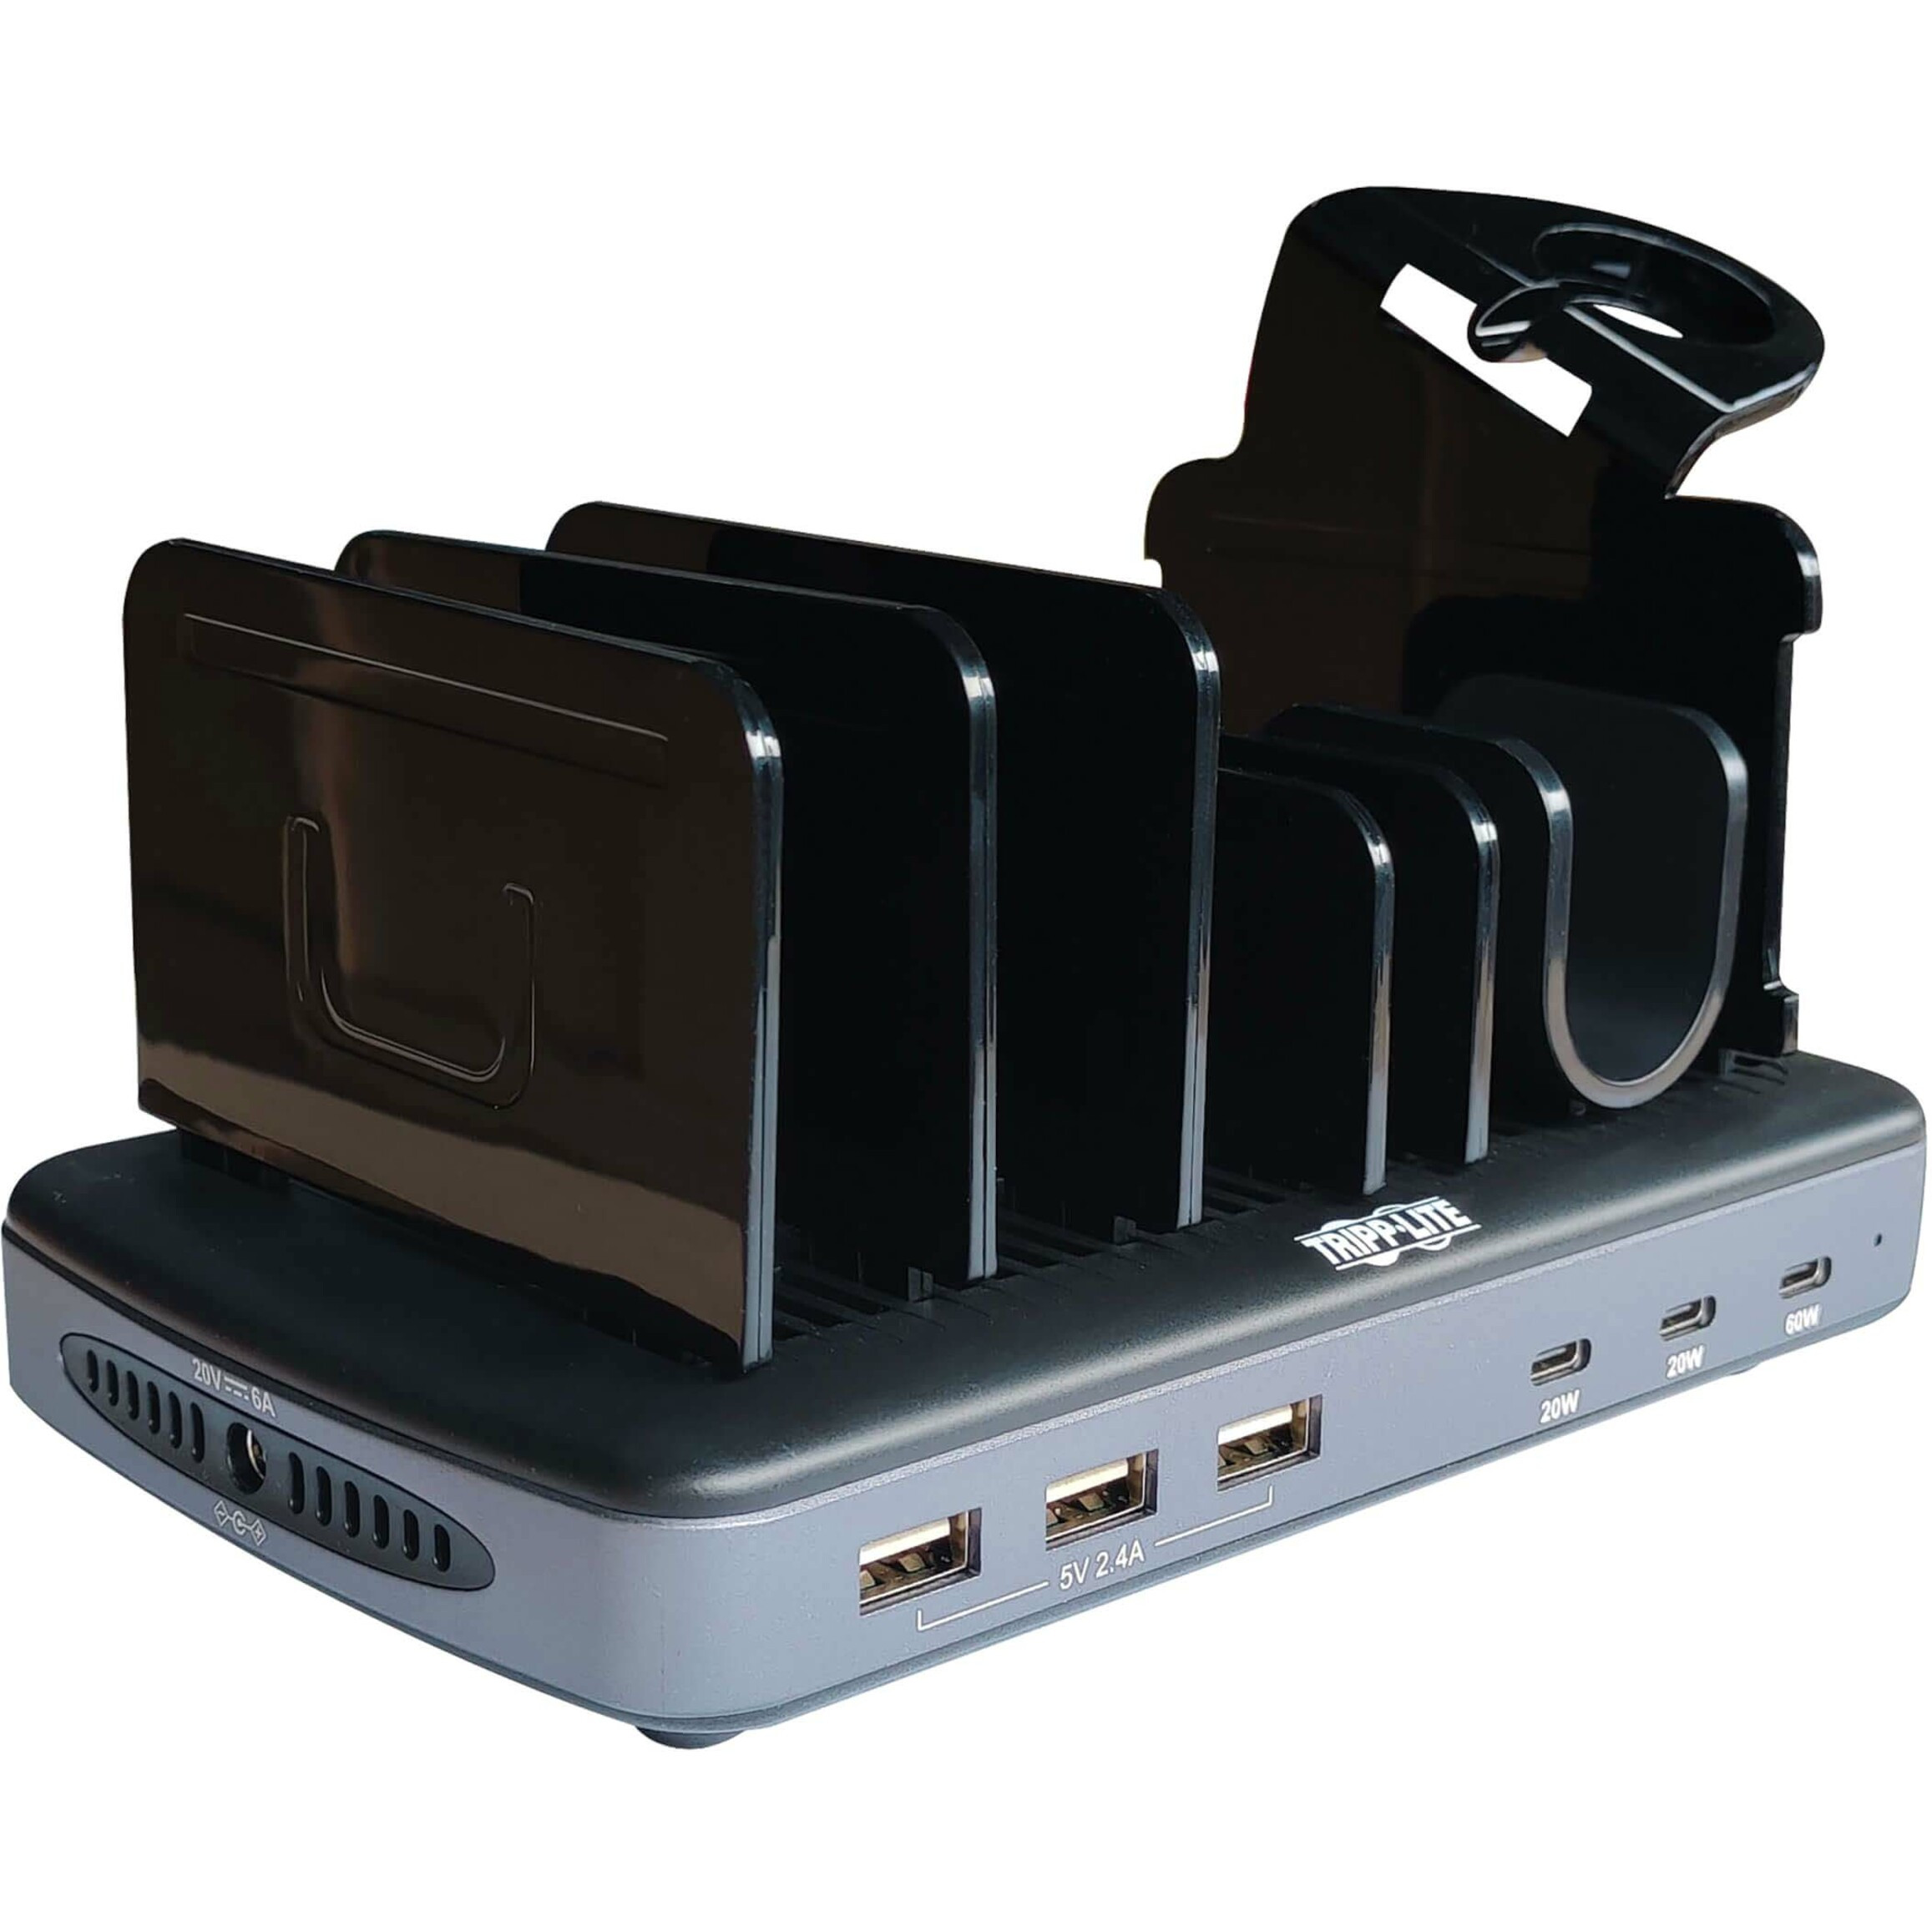 Tripp Lite 6-Port USB Charging Station60W USB-C, 2x 20W USB-C, 3x USB-A, PD Charging, Device and Apple Watch Storage120 W120 V… U280-006-C3A-ST